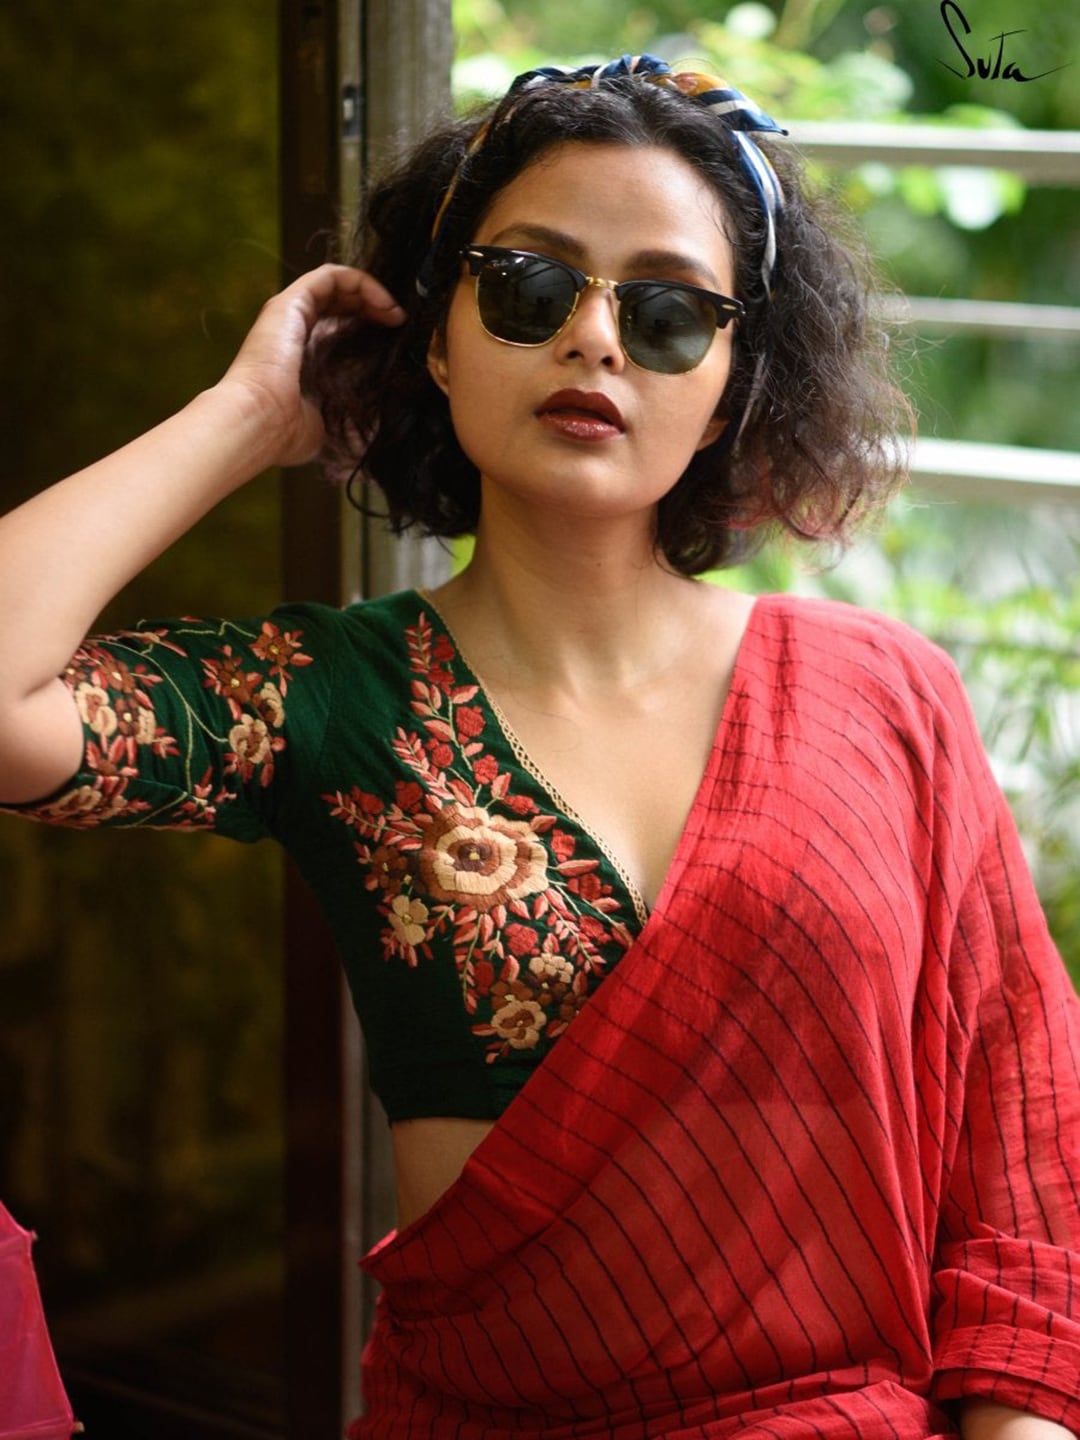 Suta Women Green Embroidered Cotton Saree Blouse Price in India